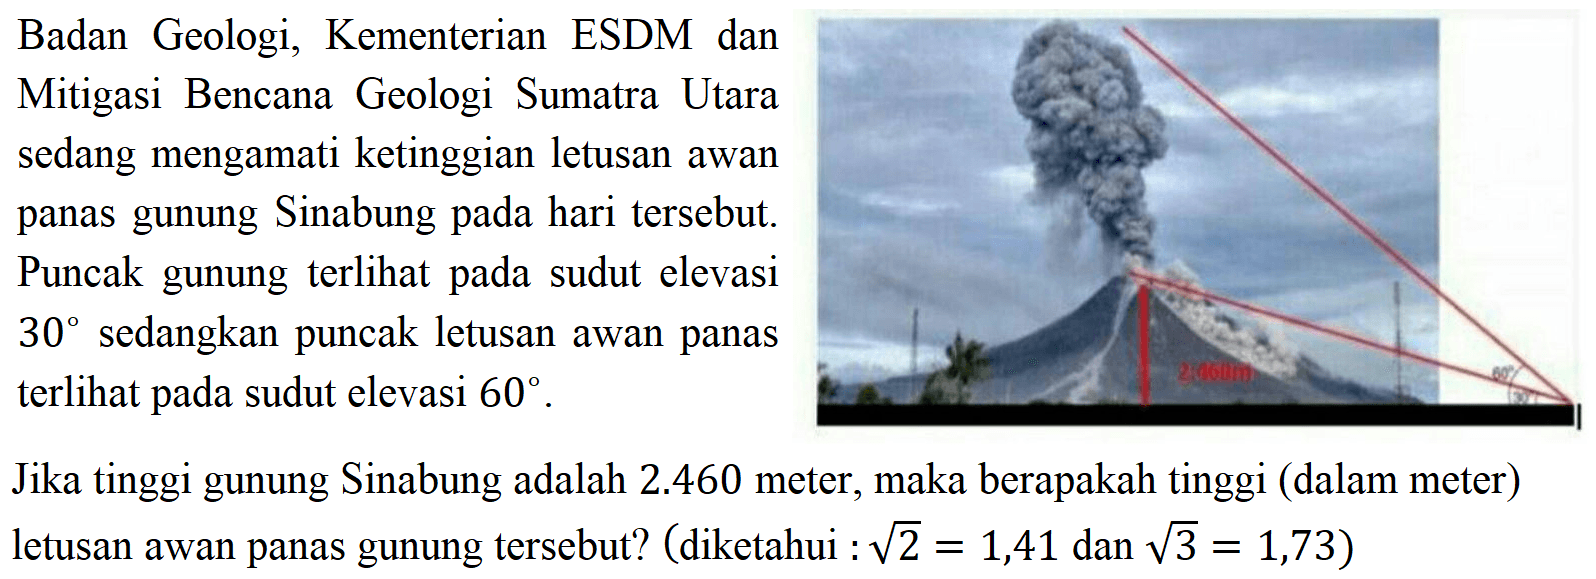 Badan Geologi, Kementerian ESDM dan Mitigasi Bencana Geologi Sumatra Utara sedang mengamati ketinggian letusan awan panas gunung Sinabung pada hari tersebut. Puncak gunung terlihat pada sudut elevasi 30 sedangkan puncak letusan awan panas terlihat pada sudut elevasi 60. Jika tinggi gunung Sinabung adalah 2.460 meter, maka berapakah tinggi (dalam meter) letusan awan panas gunung tersebut? (diketahui: akar(2)=1,41 dan akar(3)=1,73)